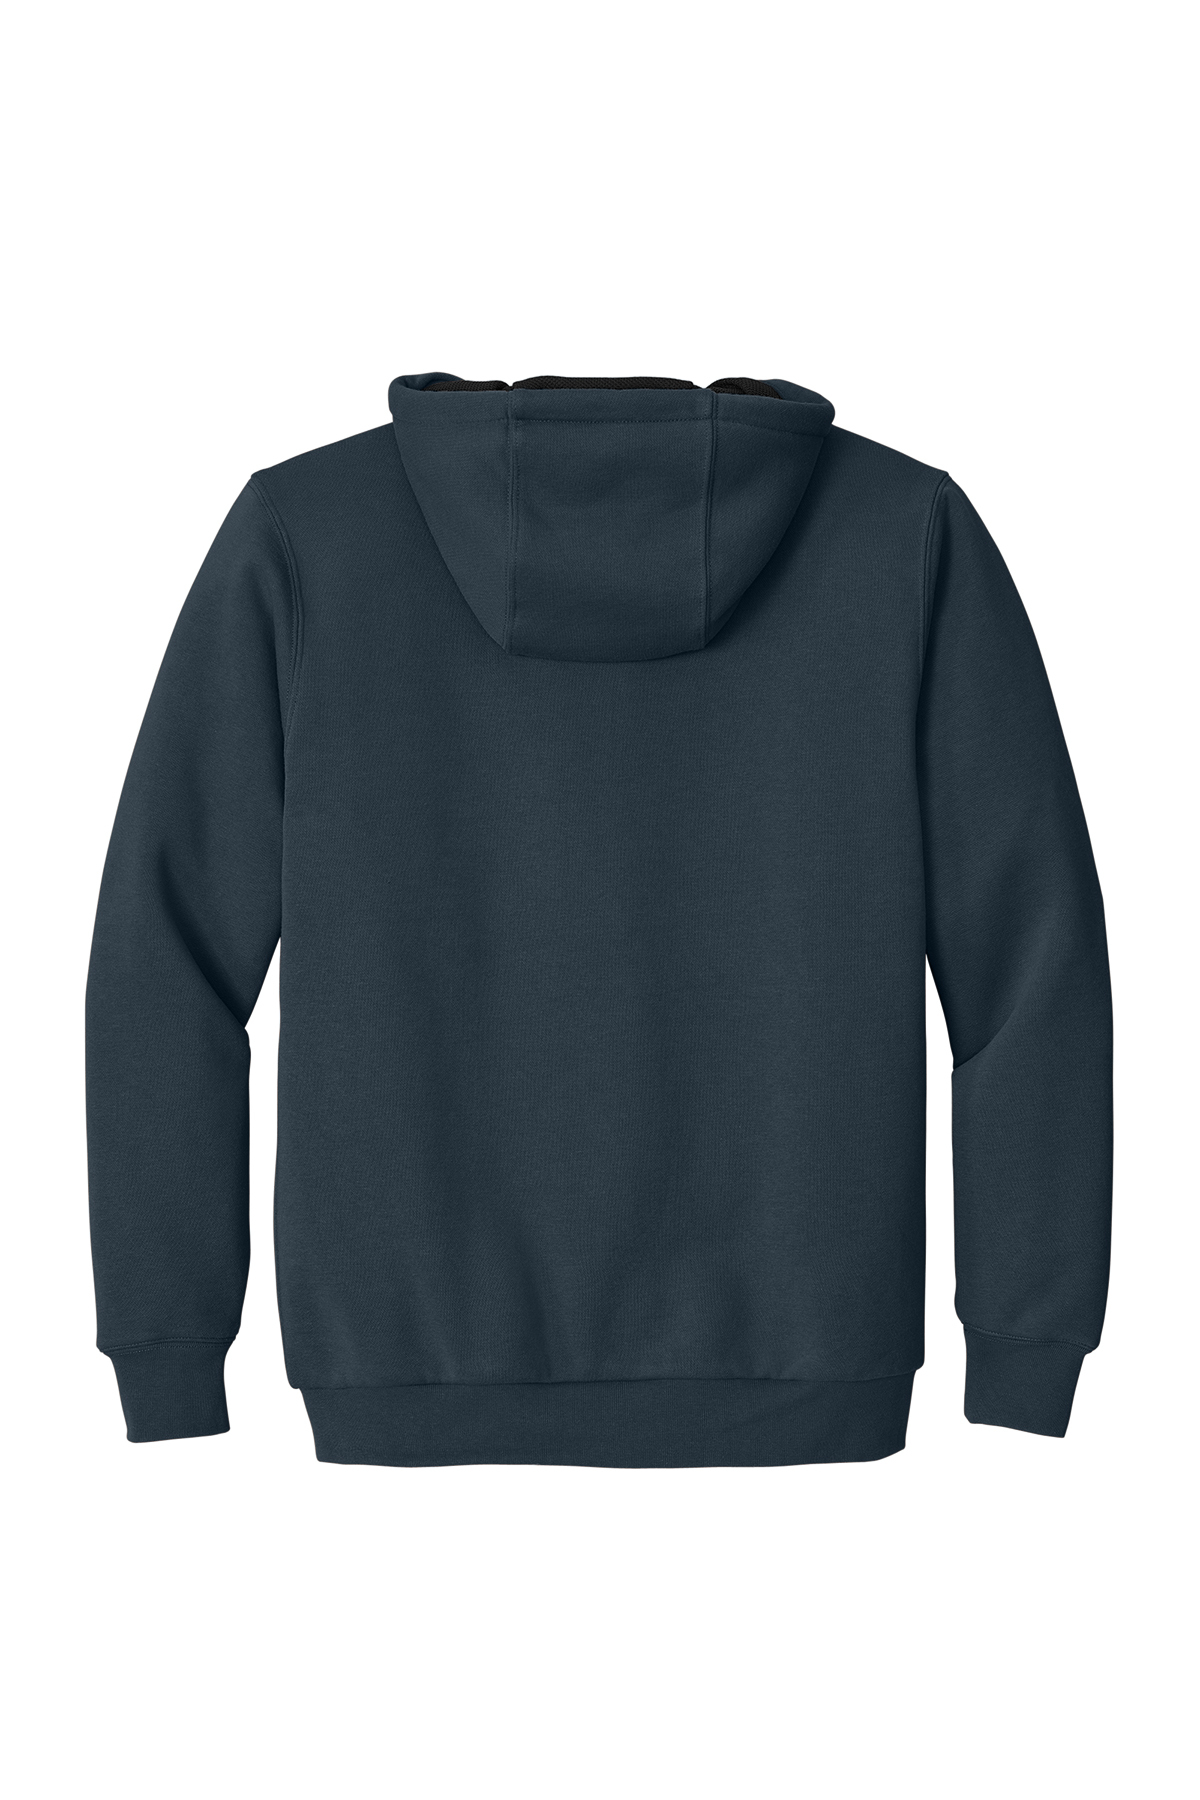 CornerStone - Heavyweight Full-Zip Hooded Sweatshirt with Thermal Lining, Product